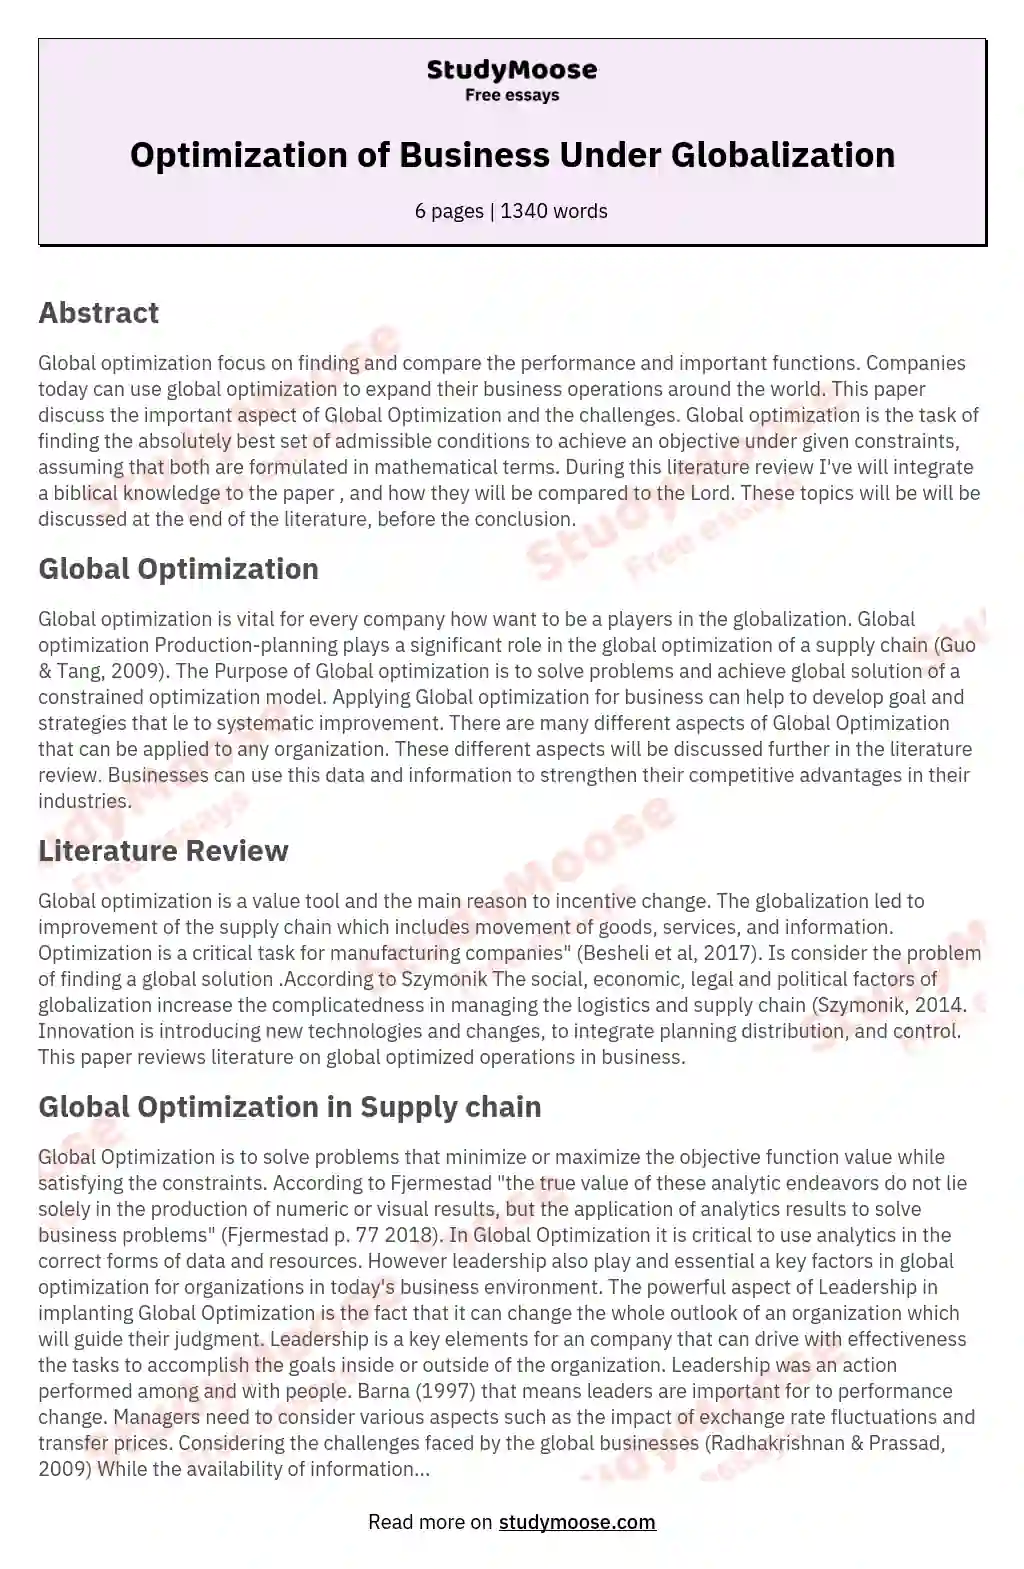 Optimization of Business Under Globalization essay